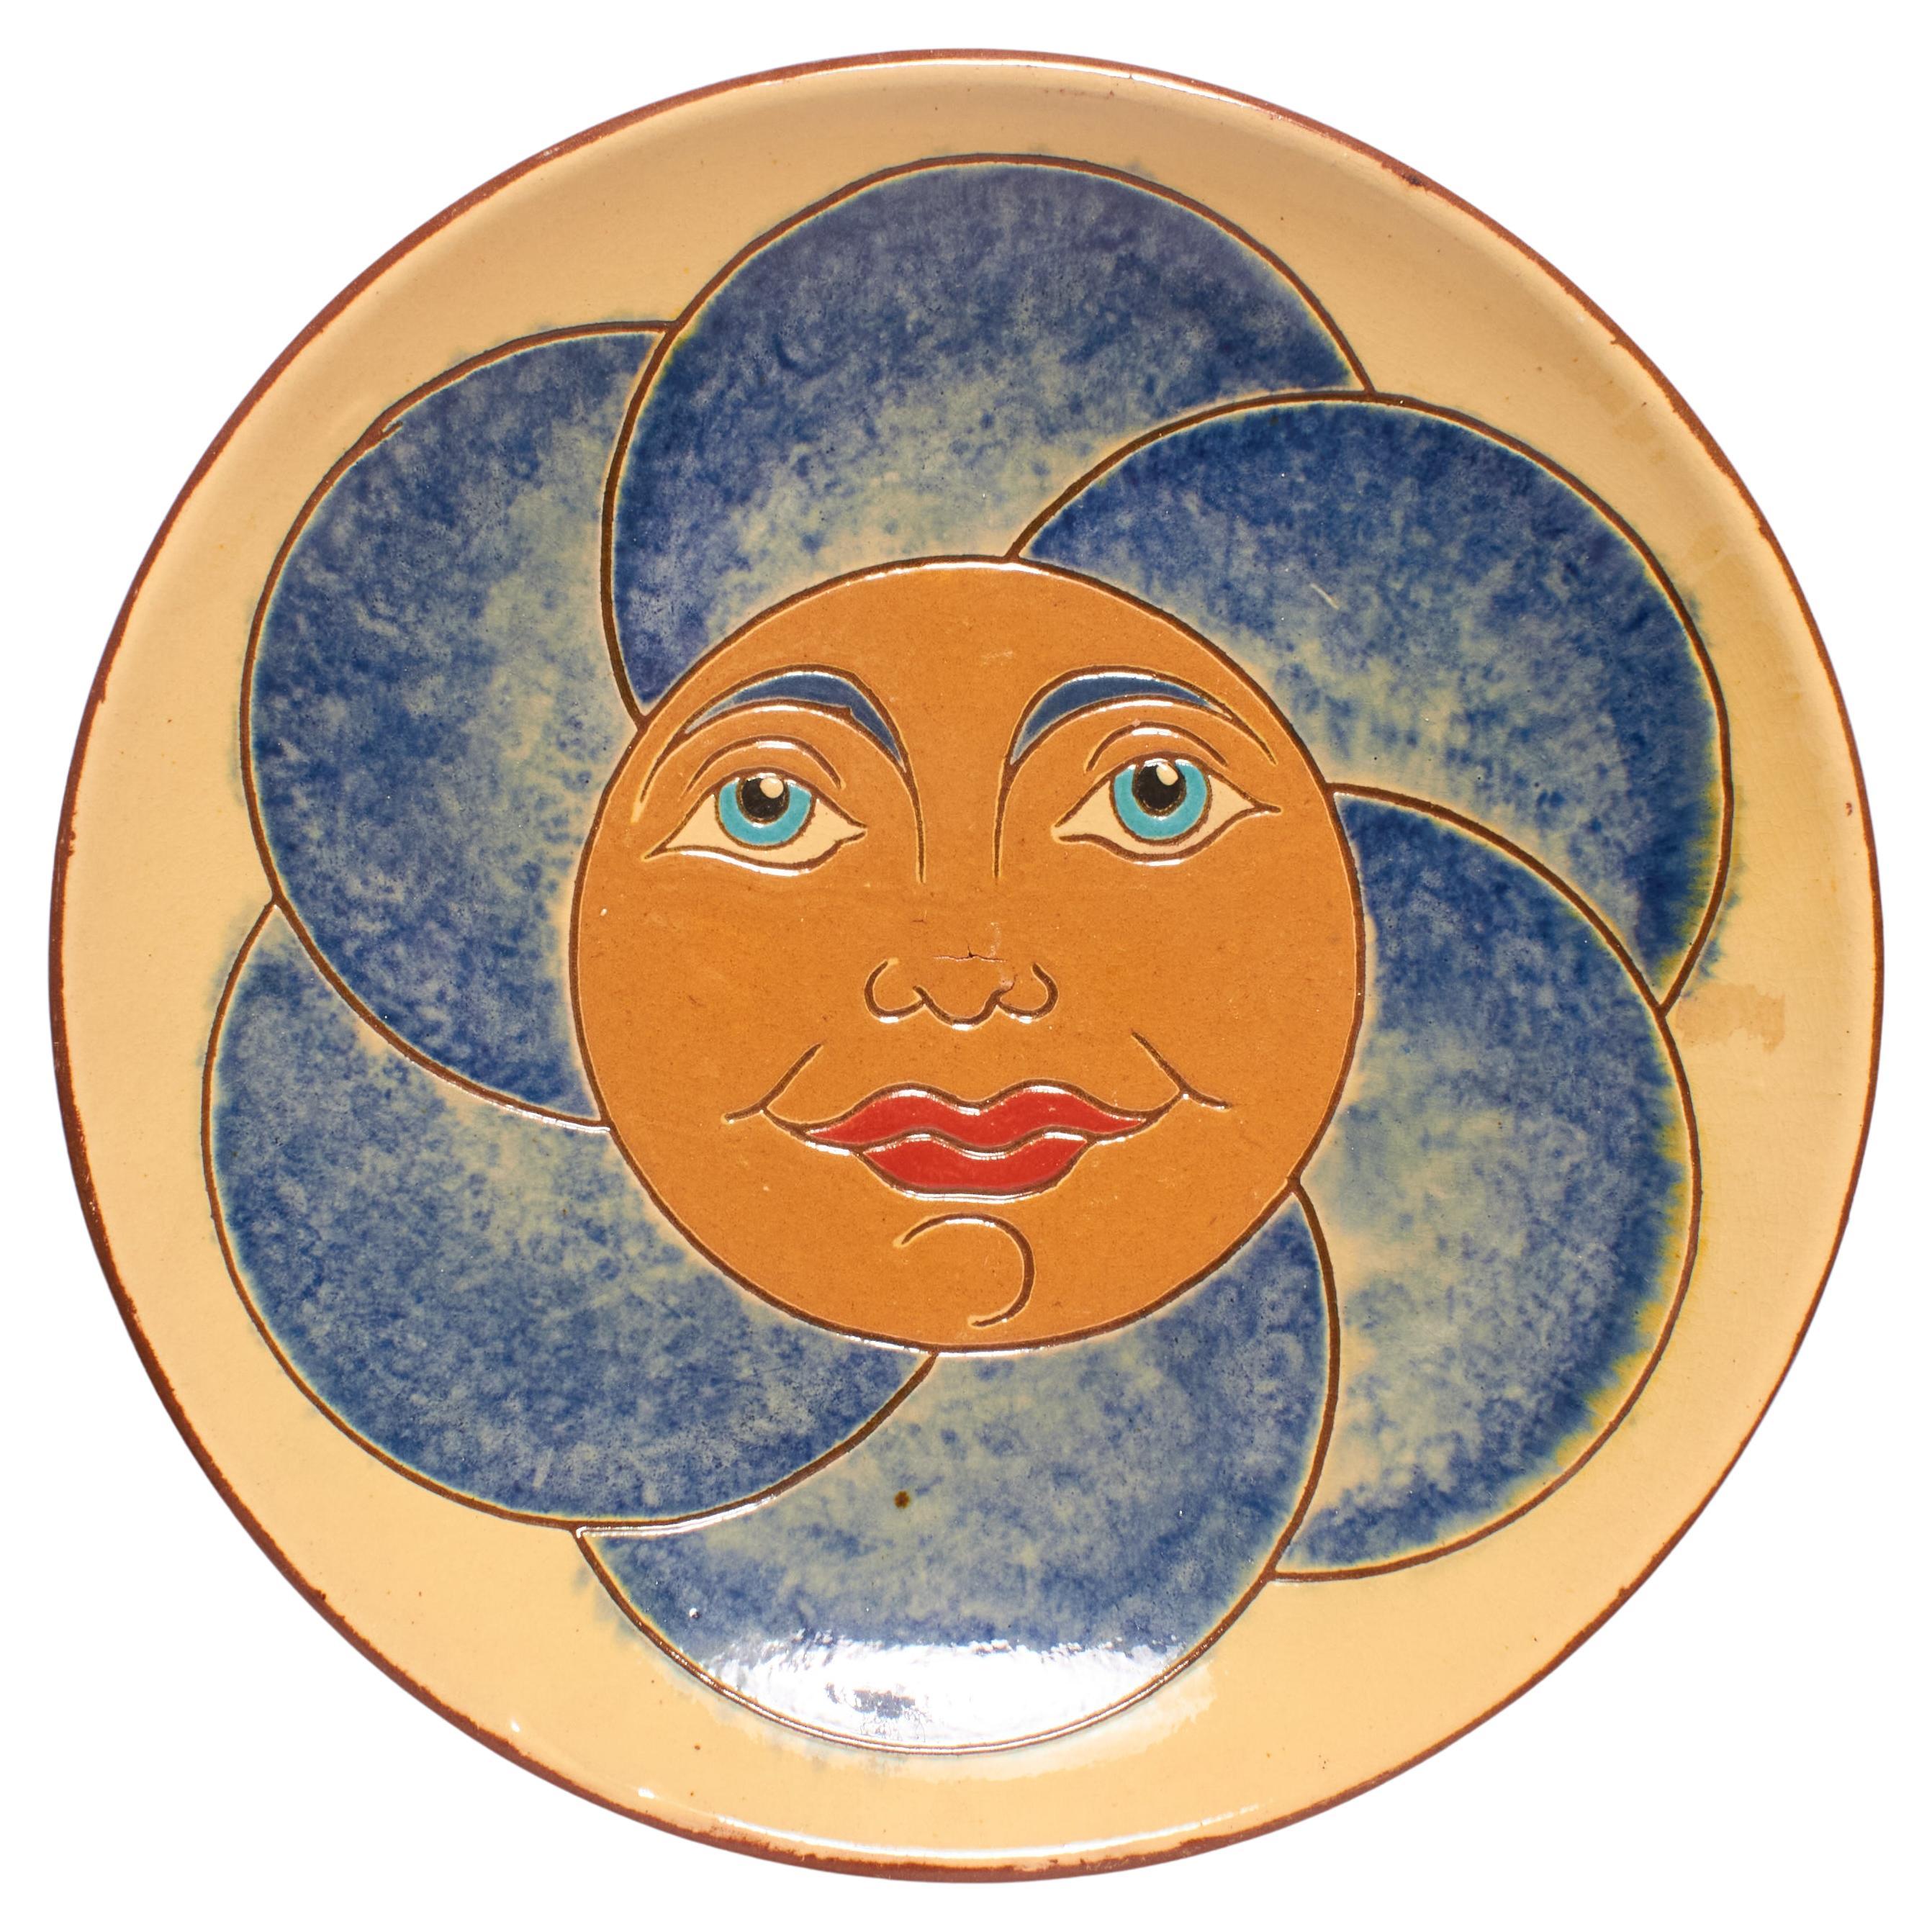 Vintage 1960 Hand-Painted Blue, Orange Ceramic Plate by Artist Diaz Costa